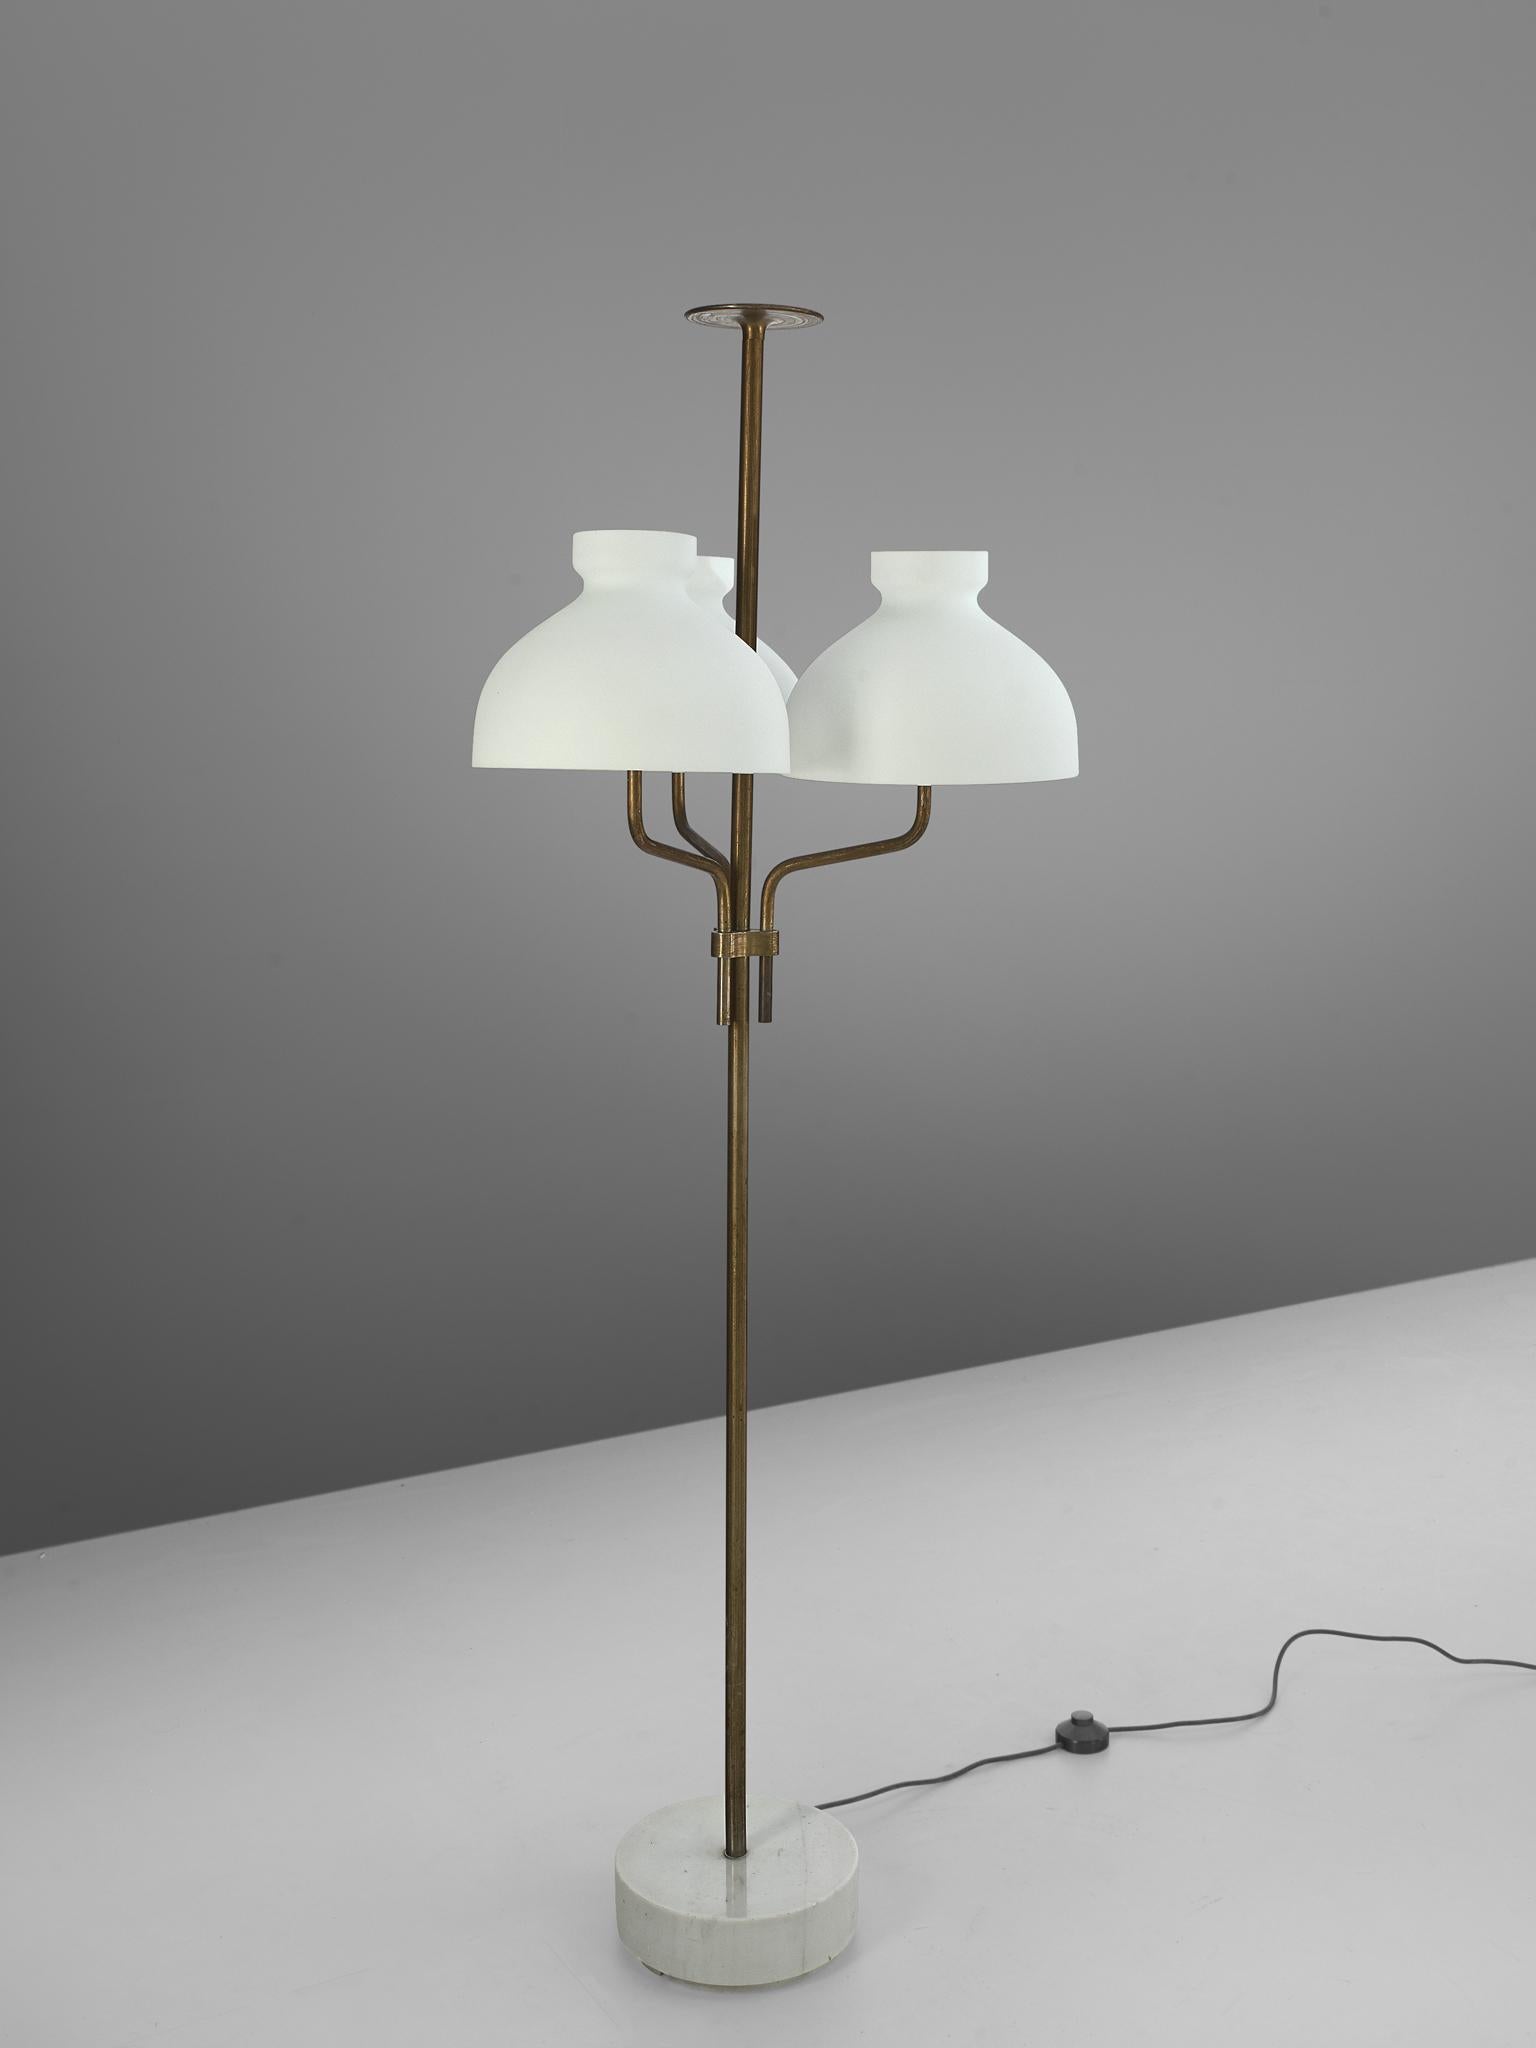 Ignazio Gardella 'Arenzano' Floor Lamp in Brass and Opaline Glass 2